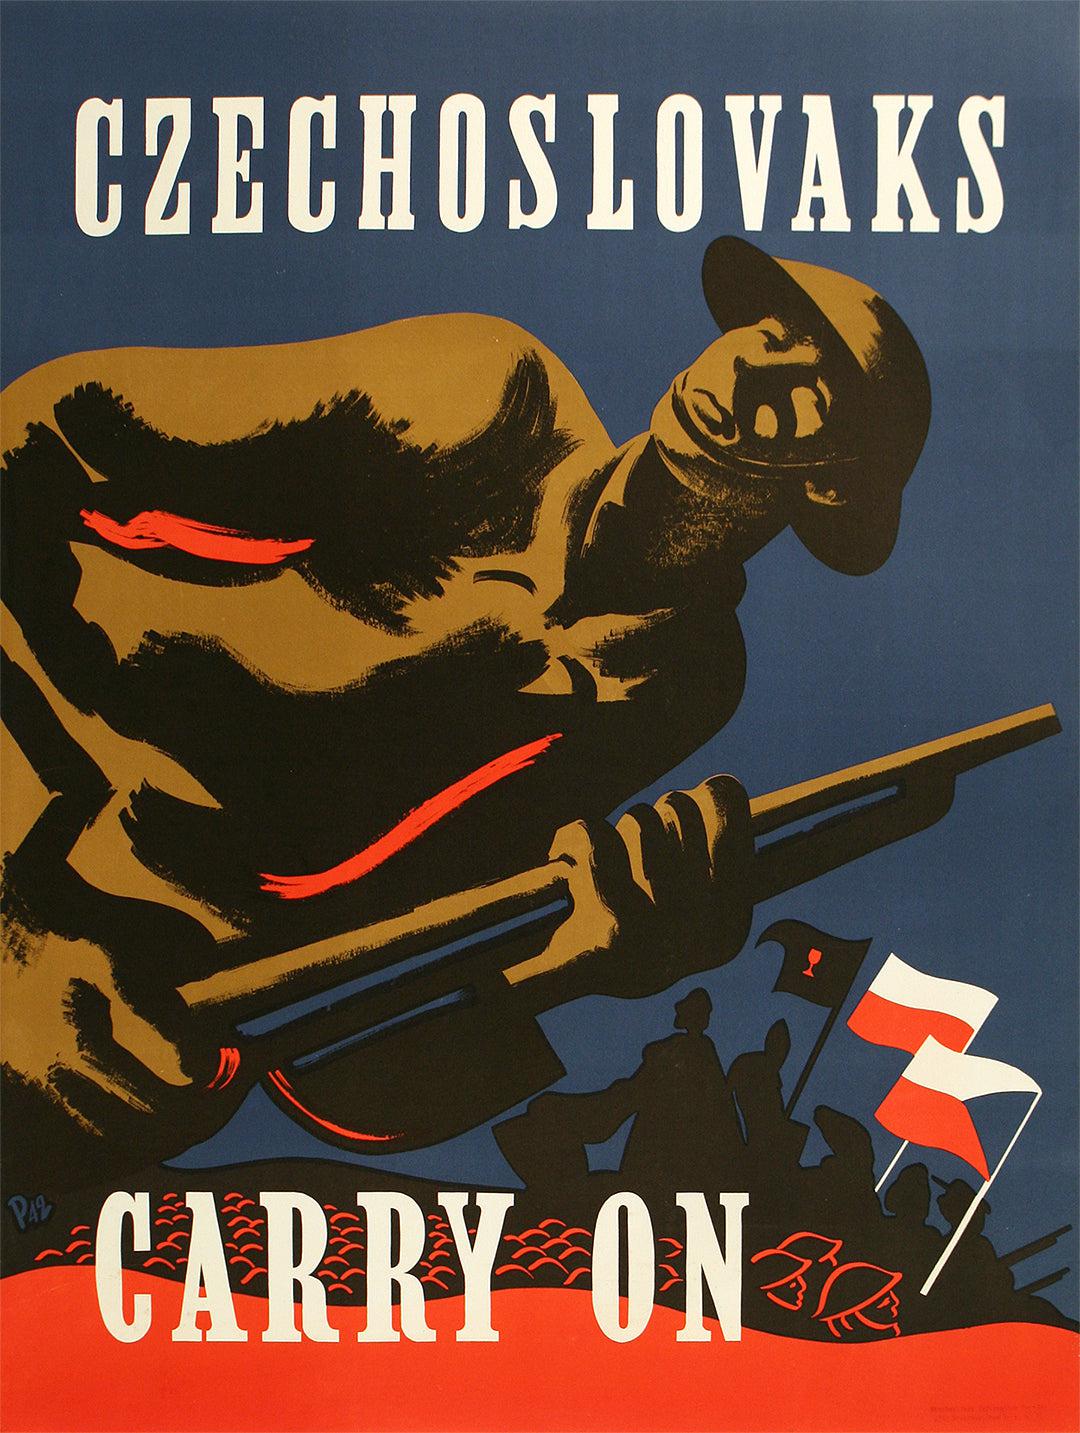 Original 1942 WWII Poster - Czechoslovaks Carry On by Peel